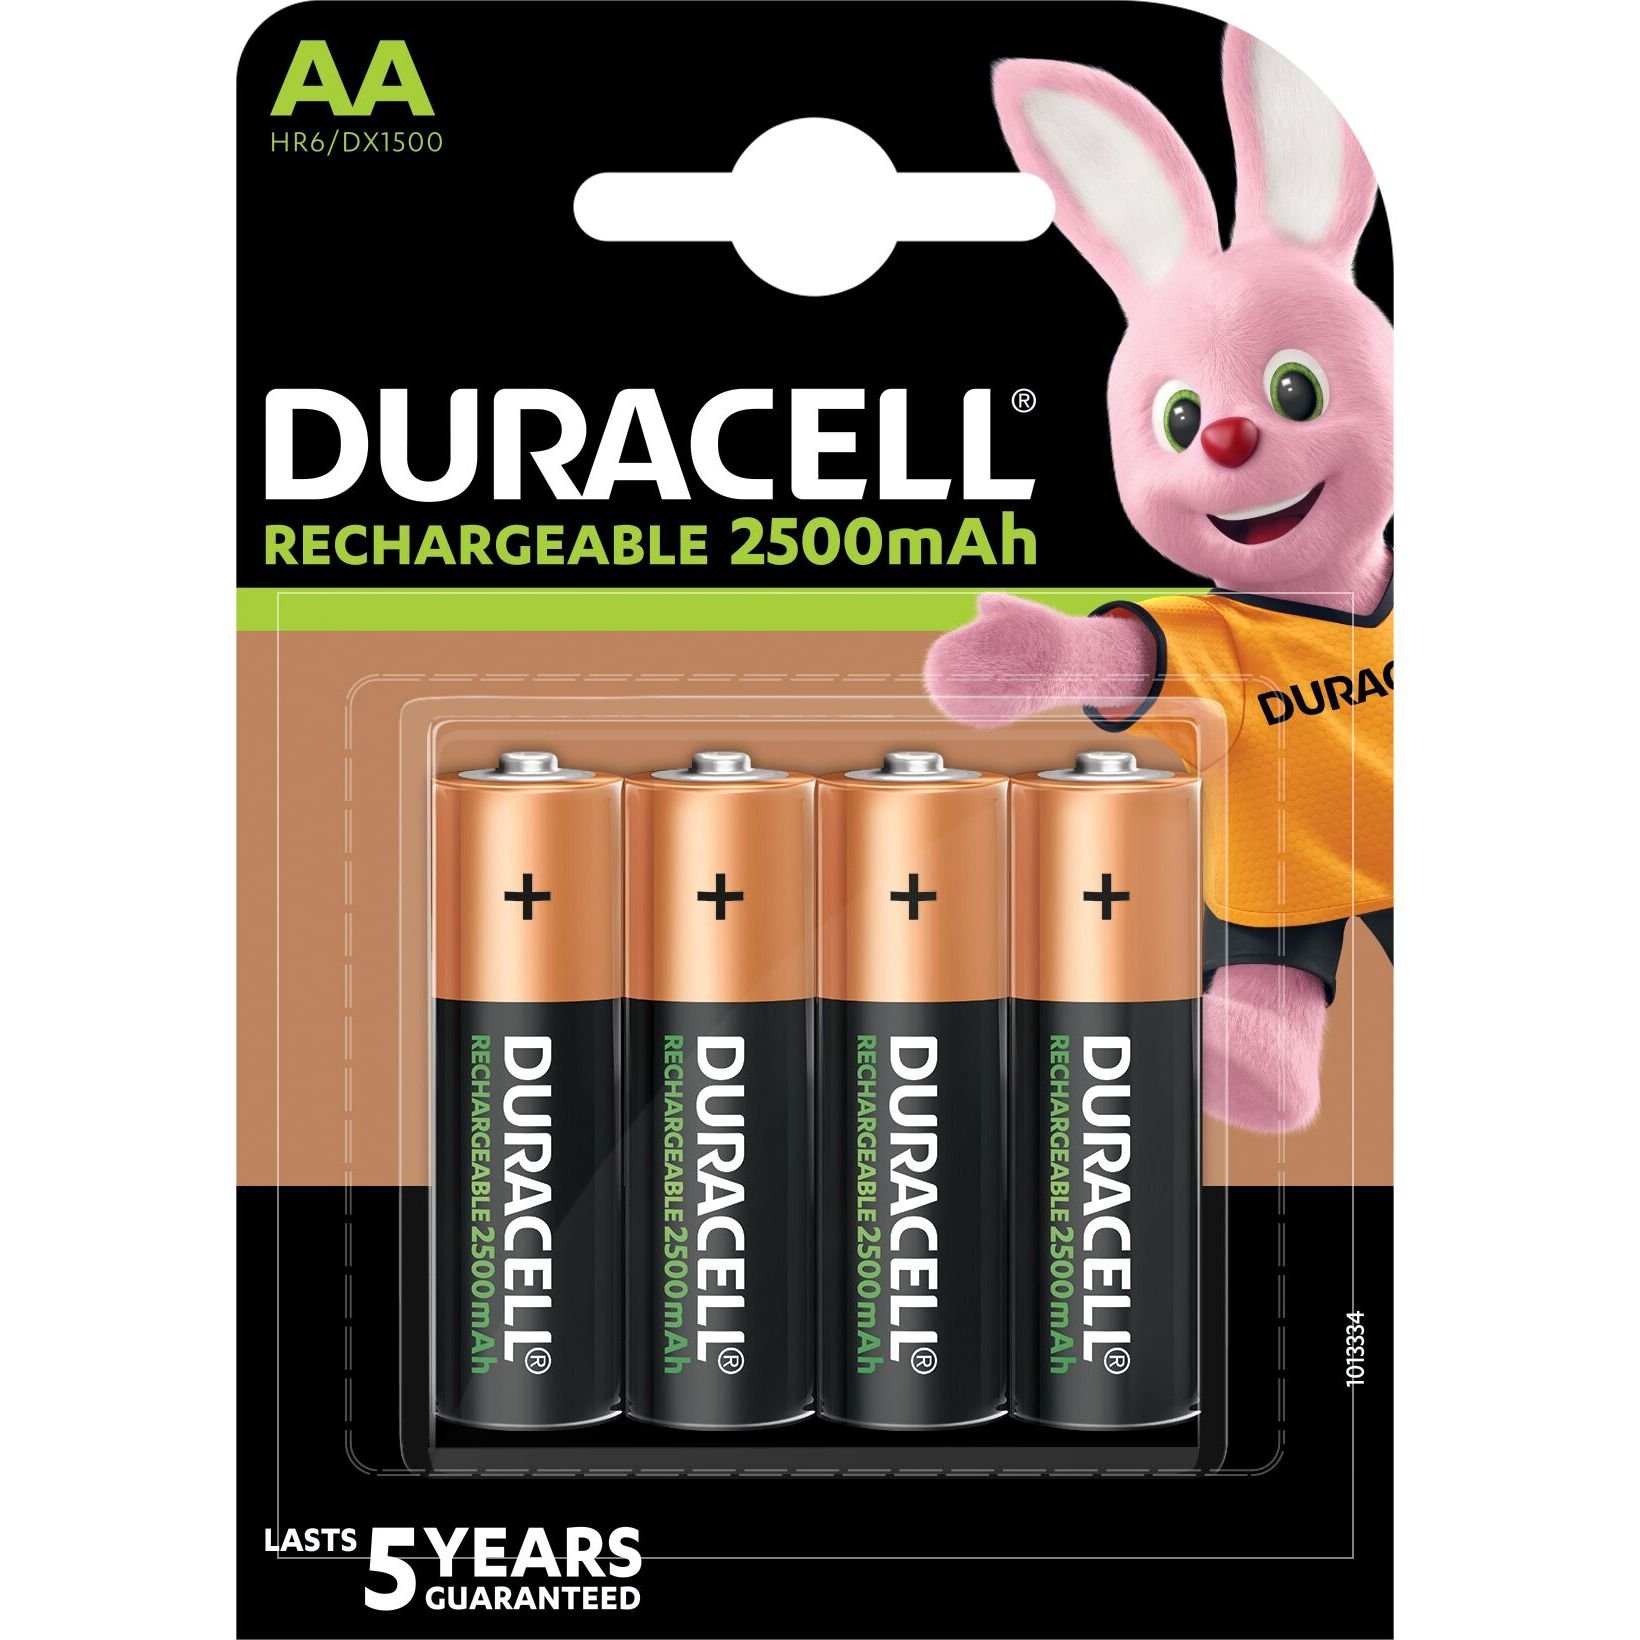 Аккумуляторы Duracell Rechargeable AA 2500 mAh HR6/DC1500, 4 шт. (5005001) - фото 2